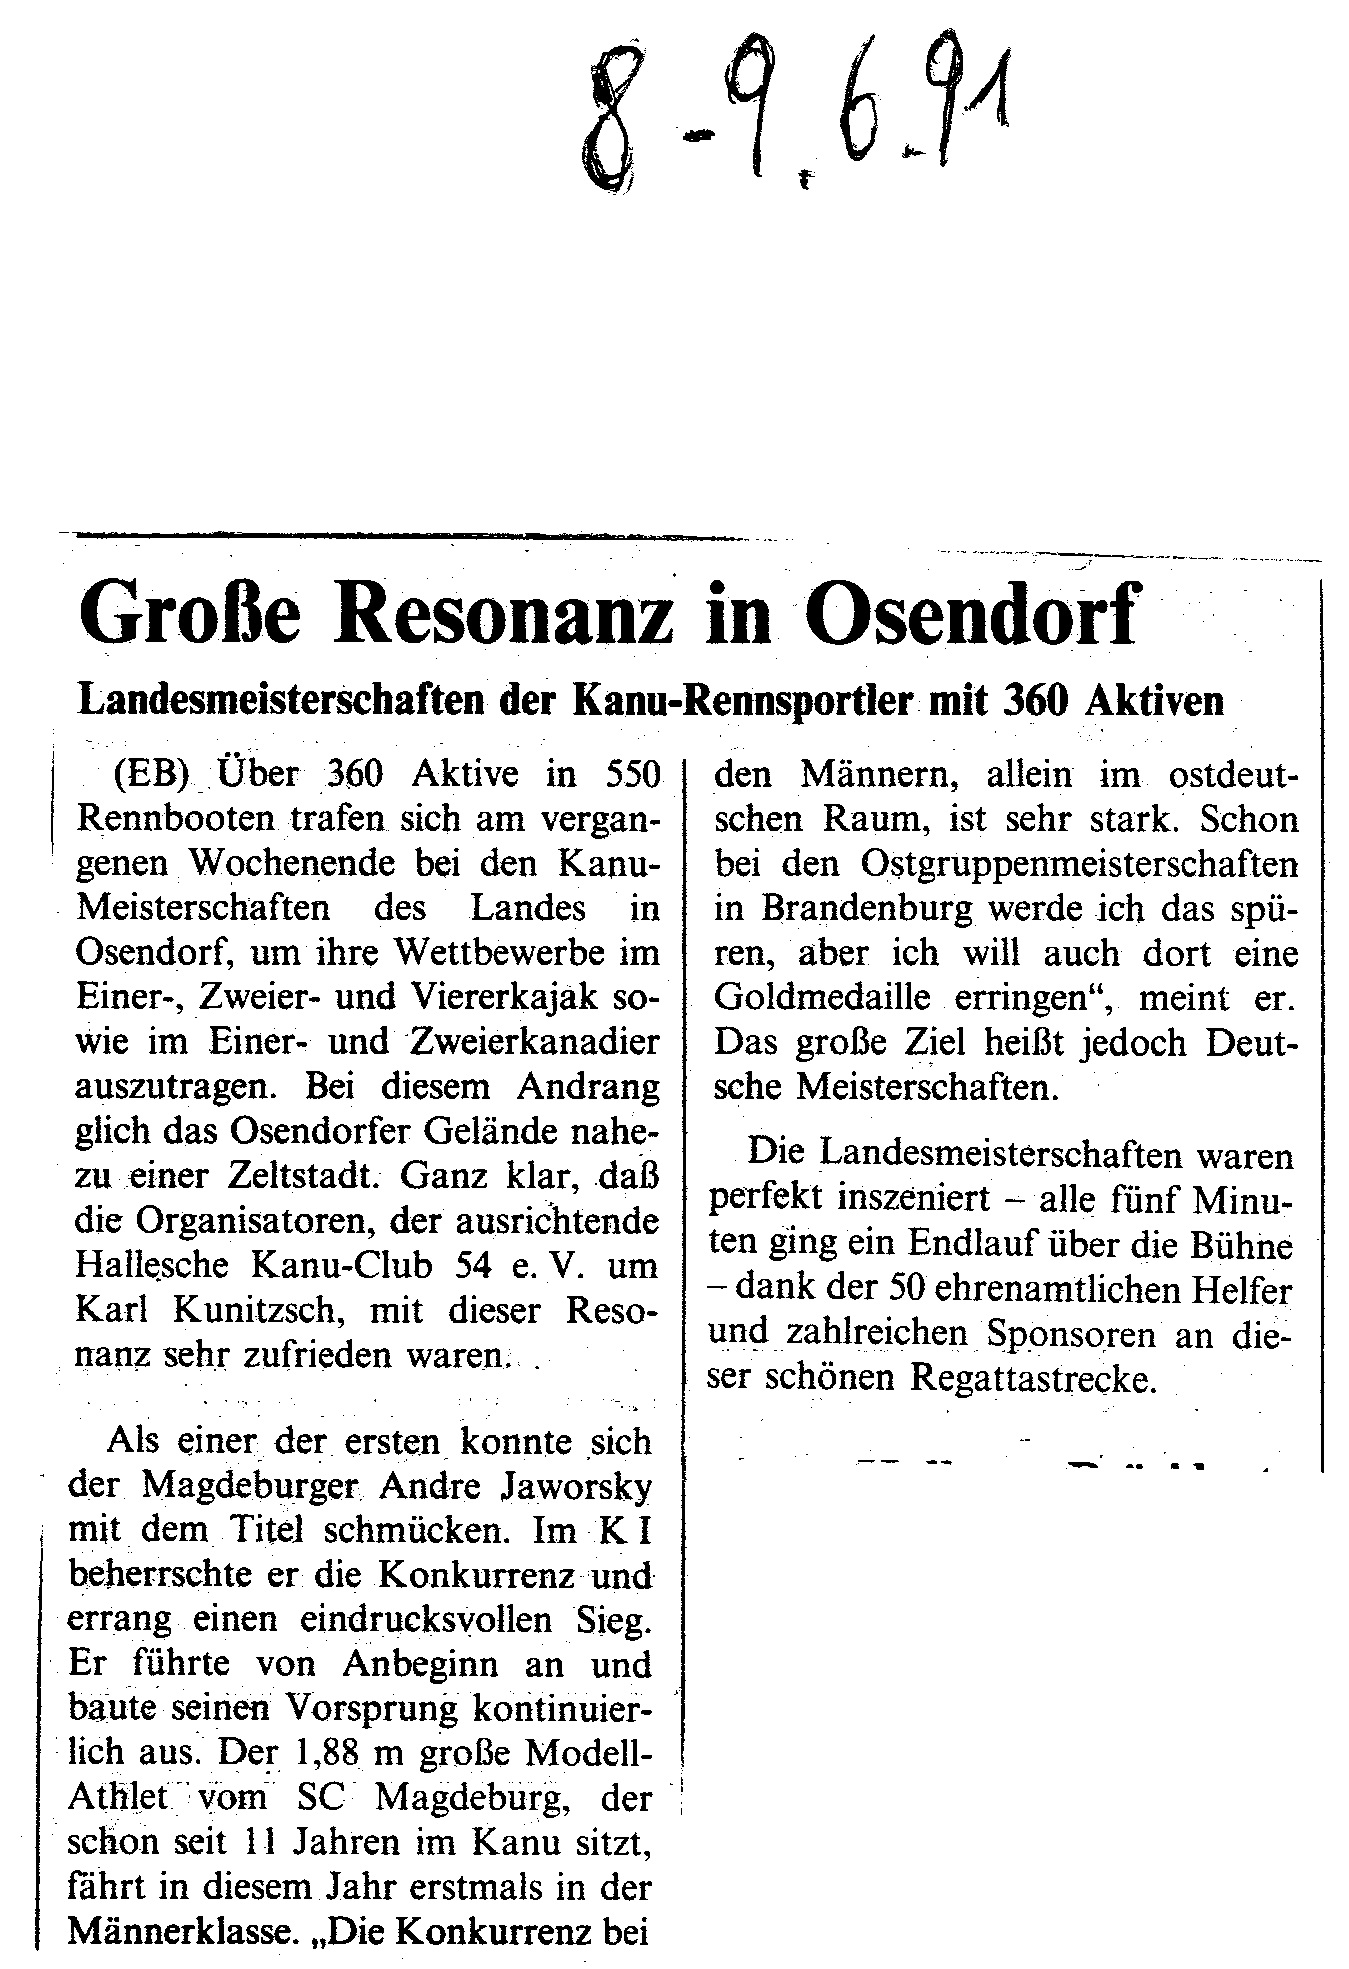 1991-06-09 Große Resonanz in Osendorf